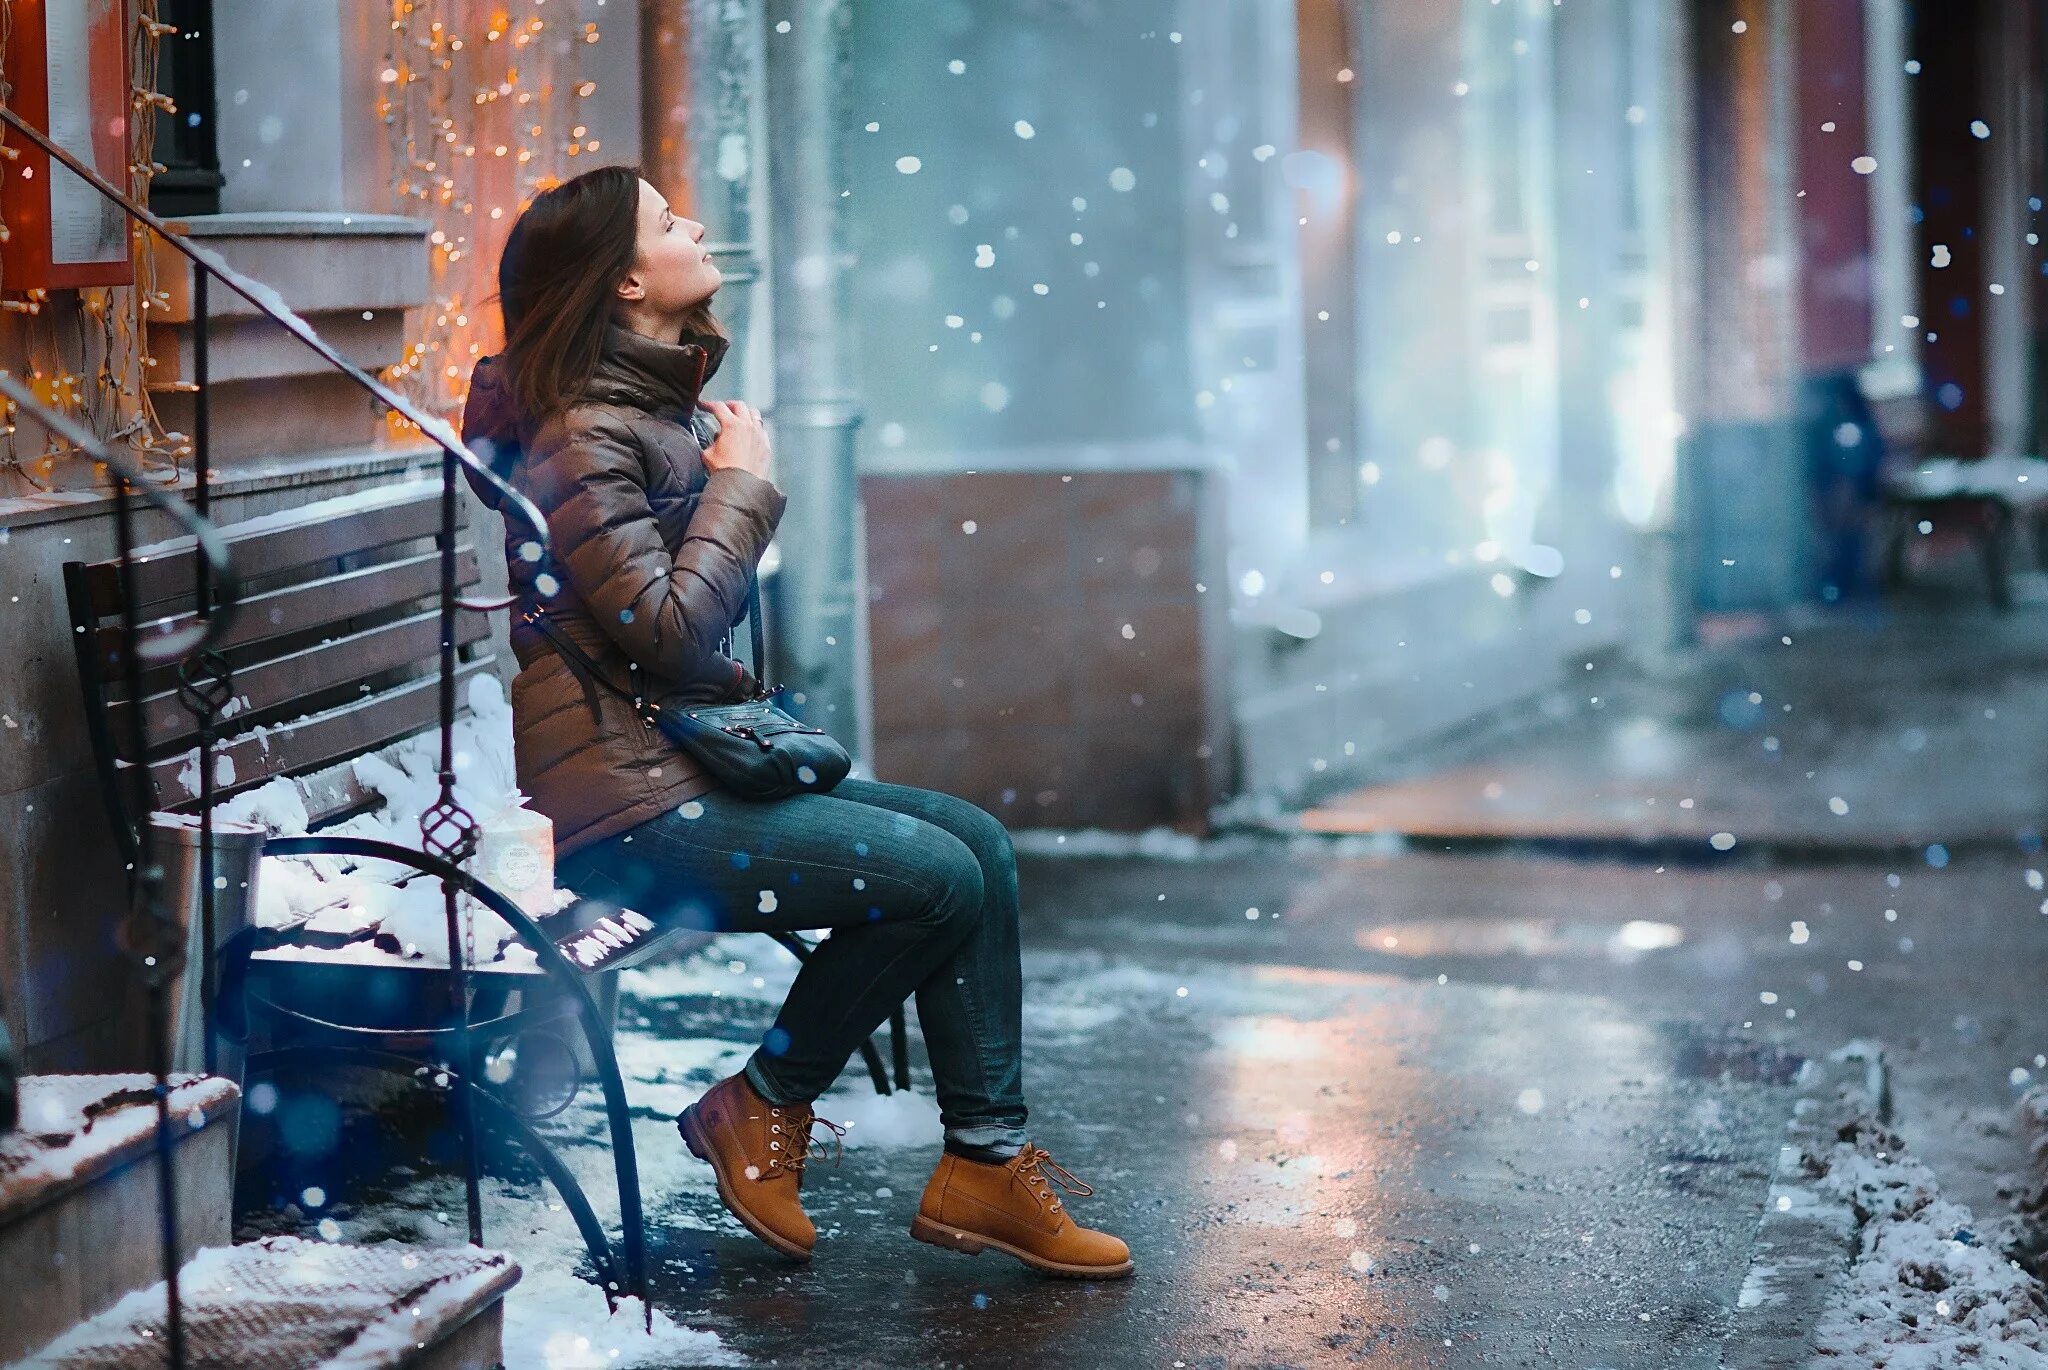 На улице снег на душе. Девушка зима. Фотосессия в городе зимой. Девушка зимой в городе. Девушка в снегу.